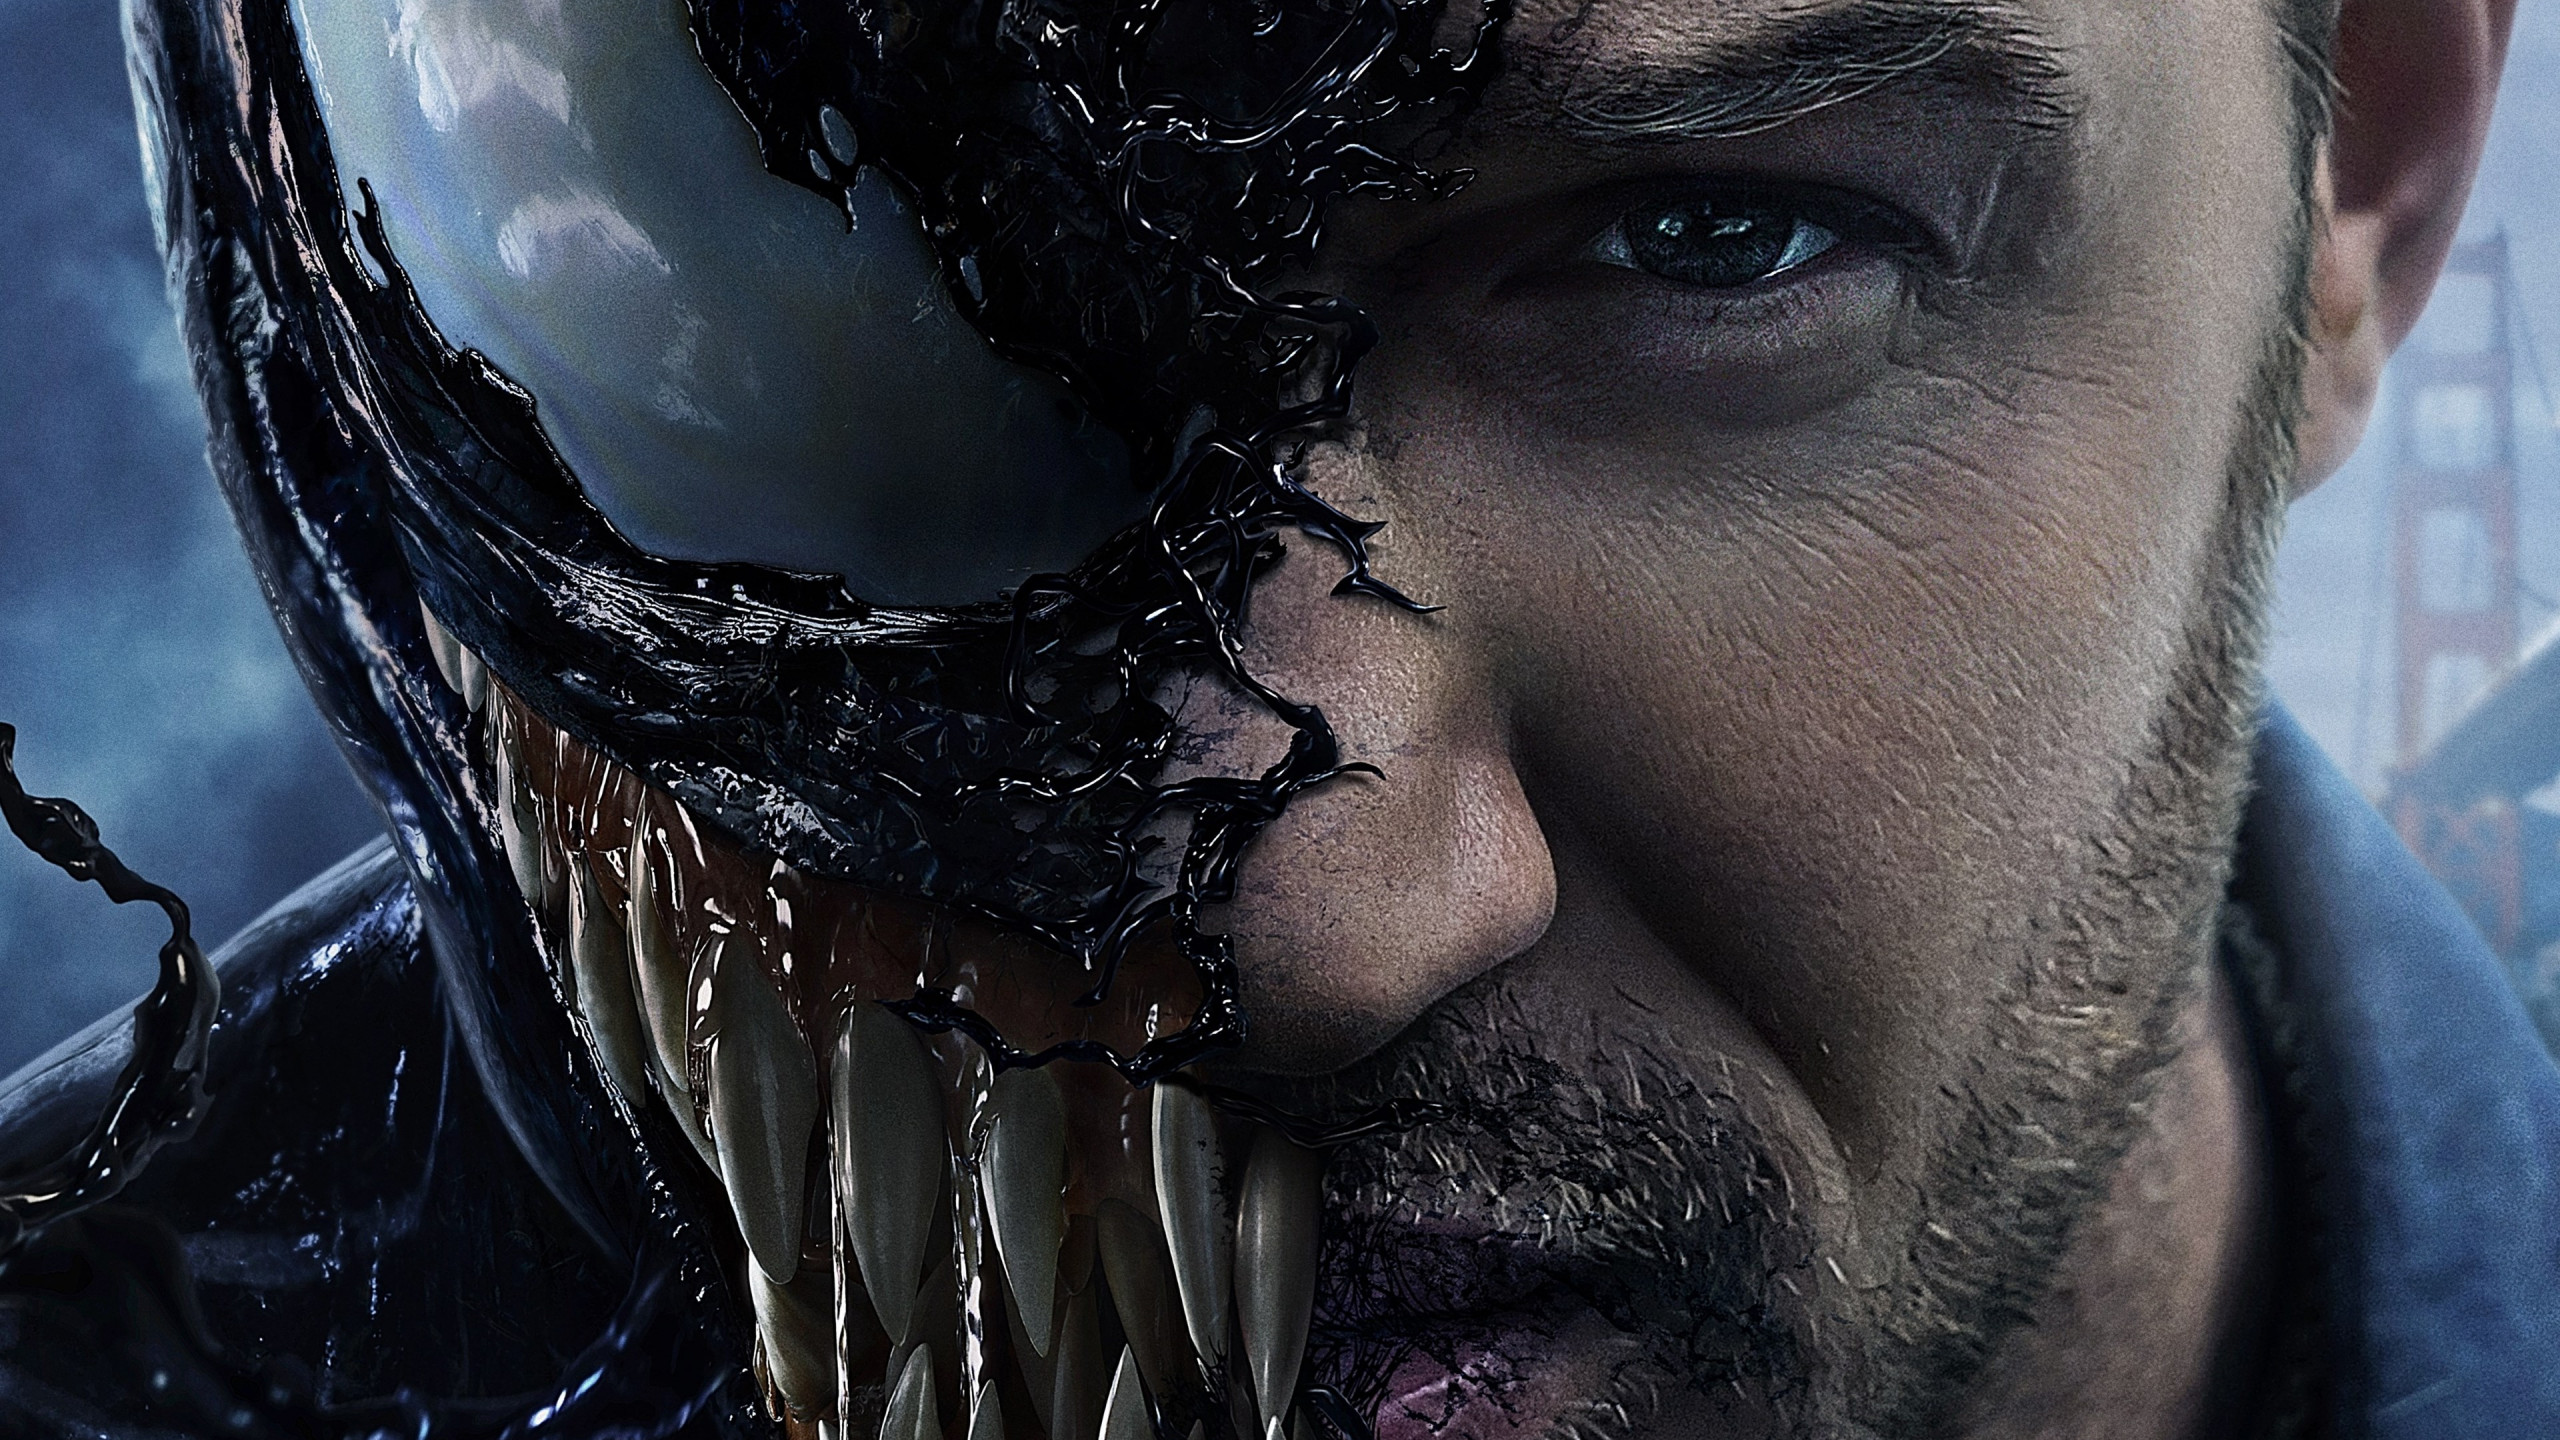 Download wallpaper: Tom Hardy in Venom 2560x1440